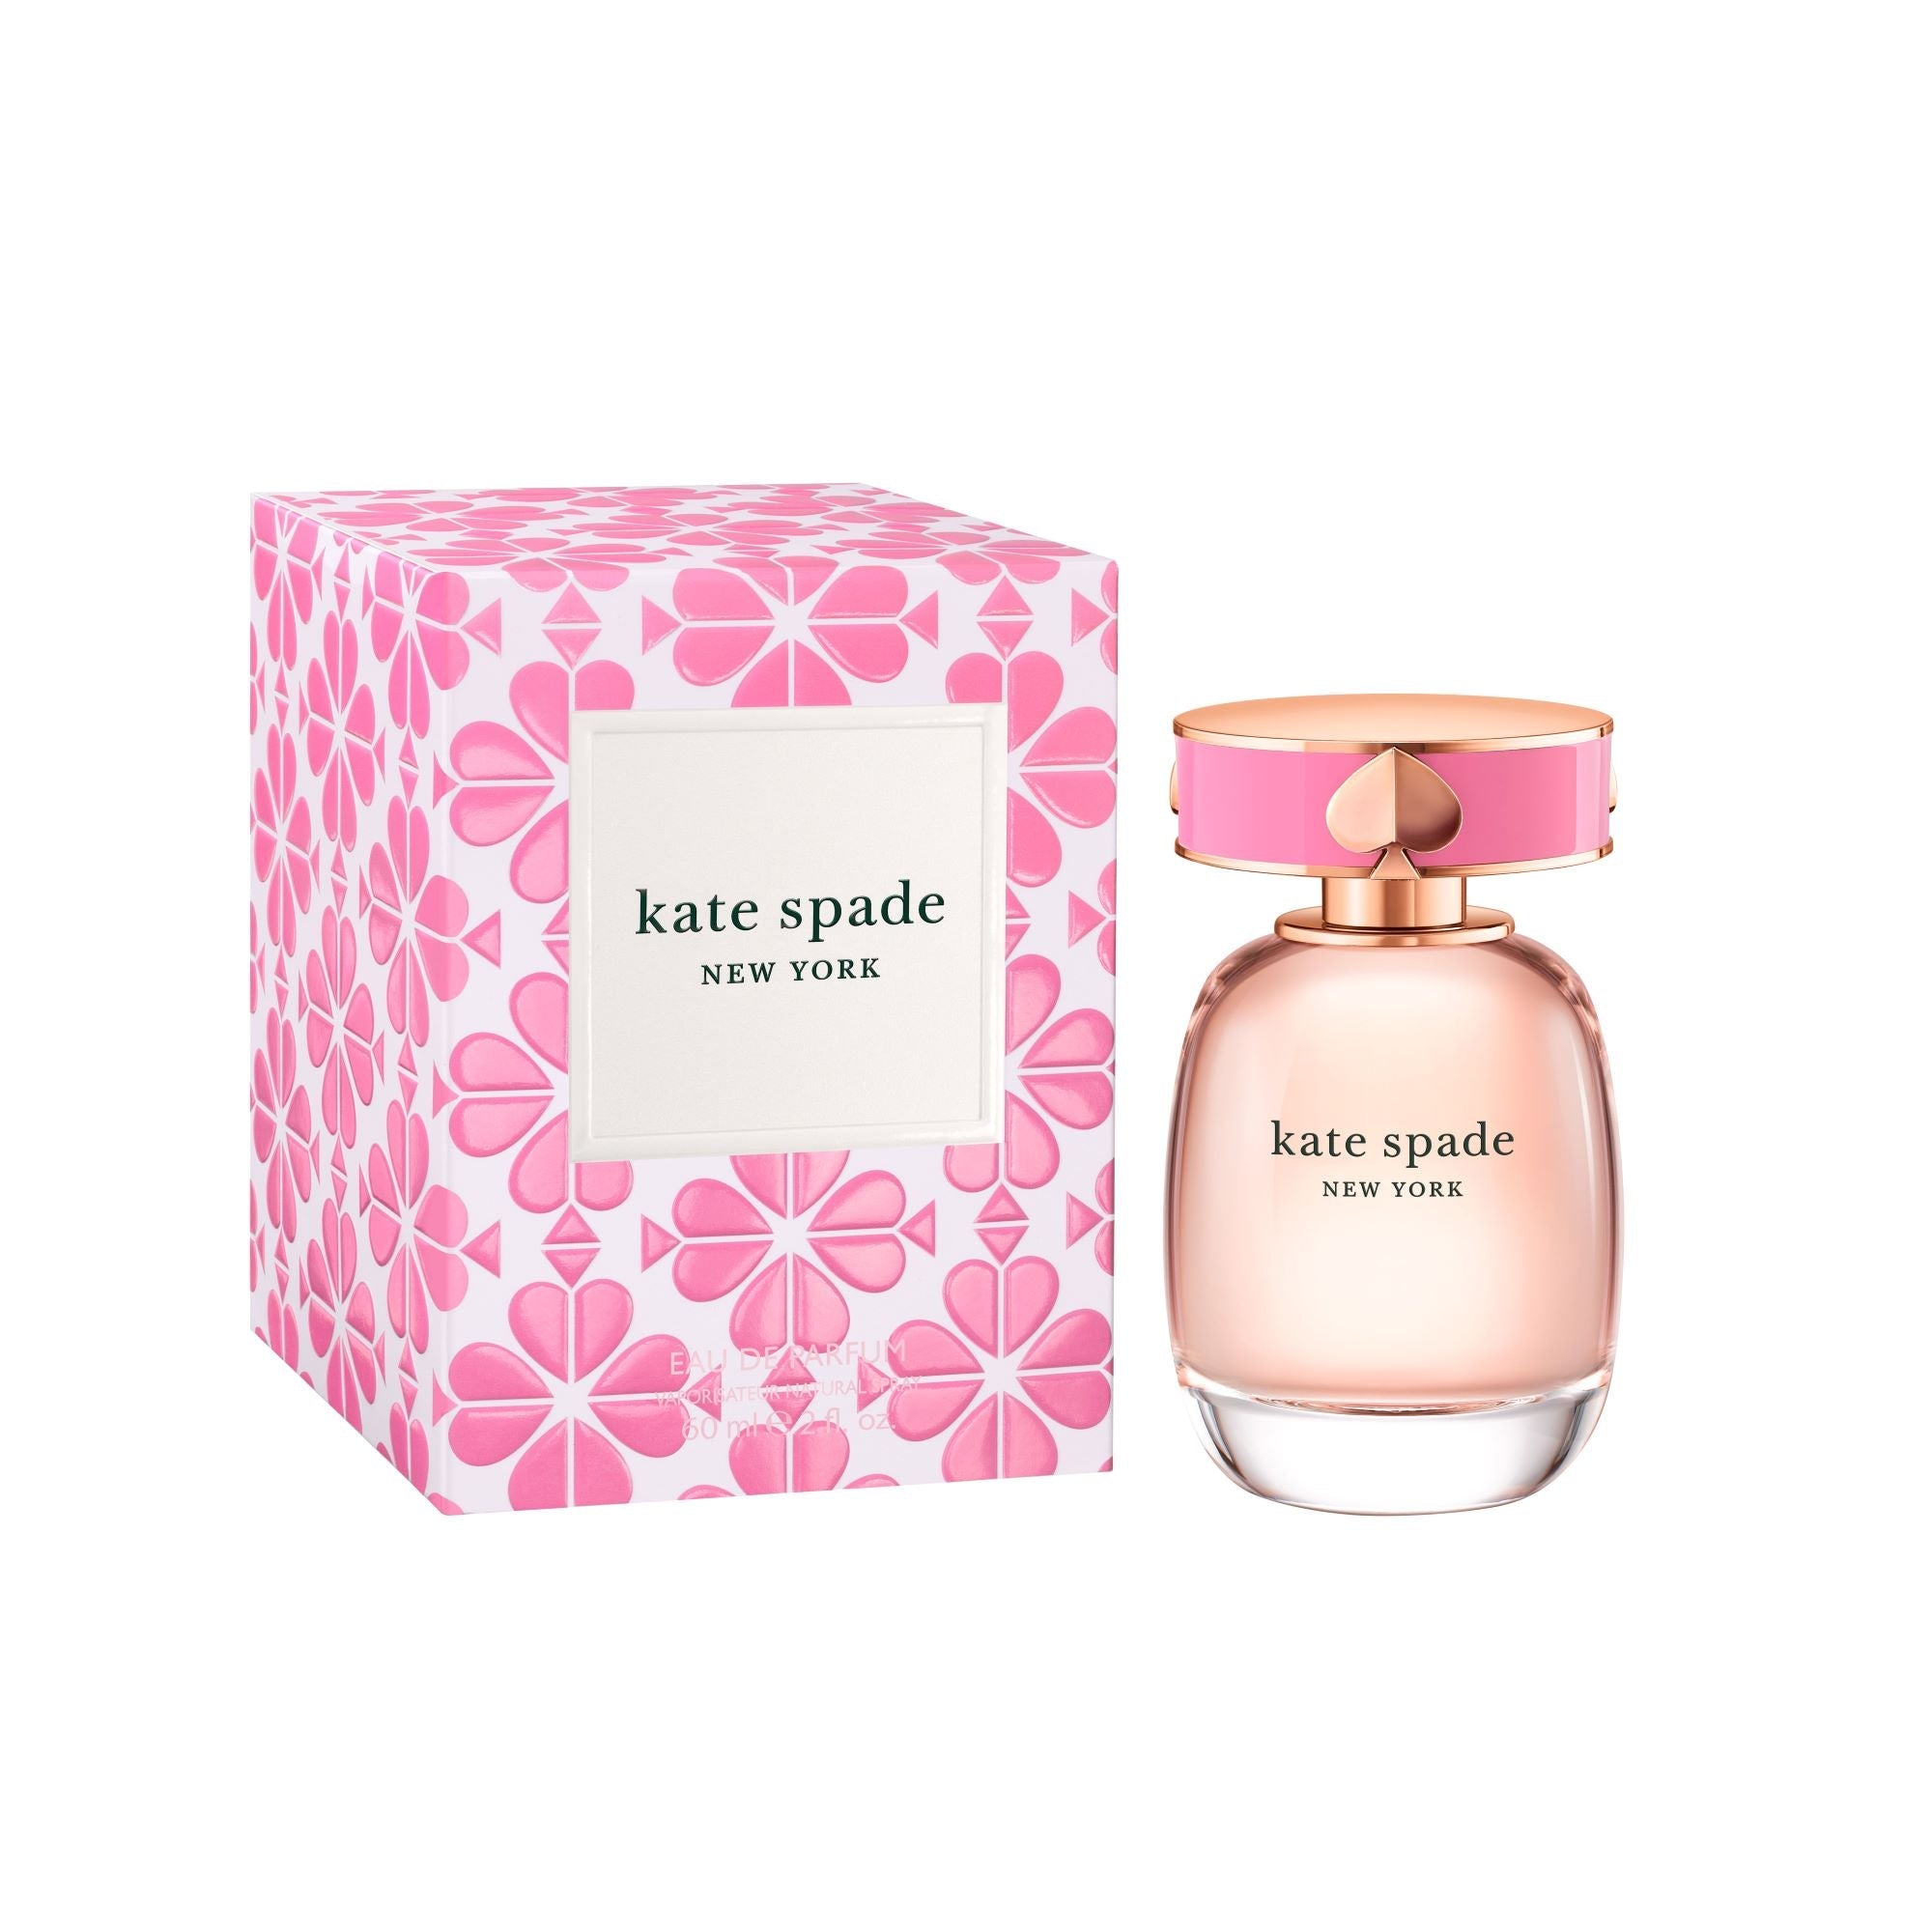 KATE SPADE Kate Spade New York Eau de Parfum | Isetan KL Online Store